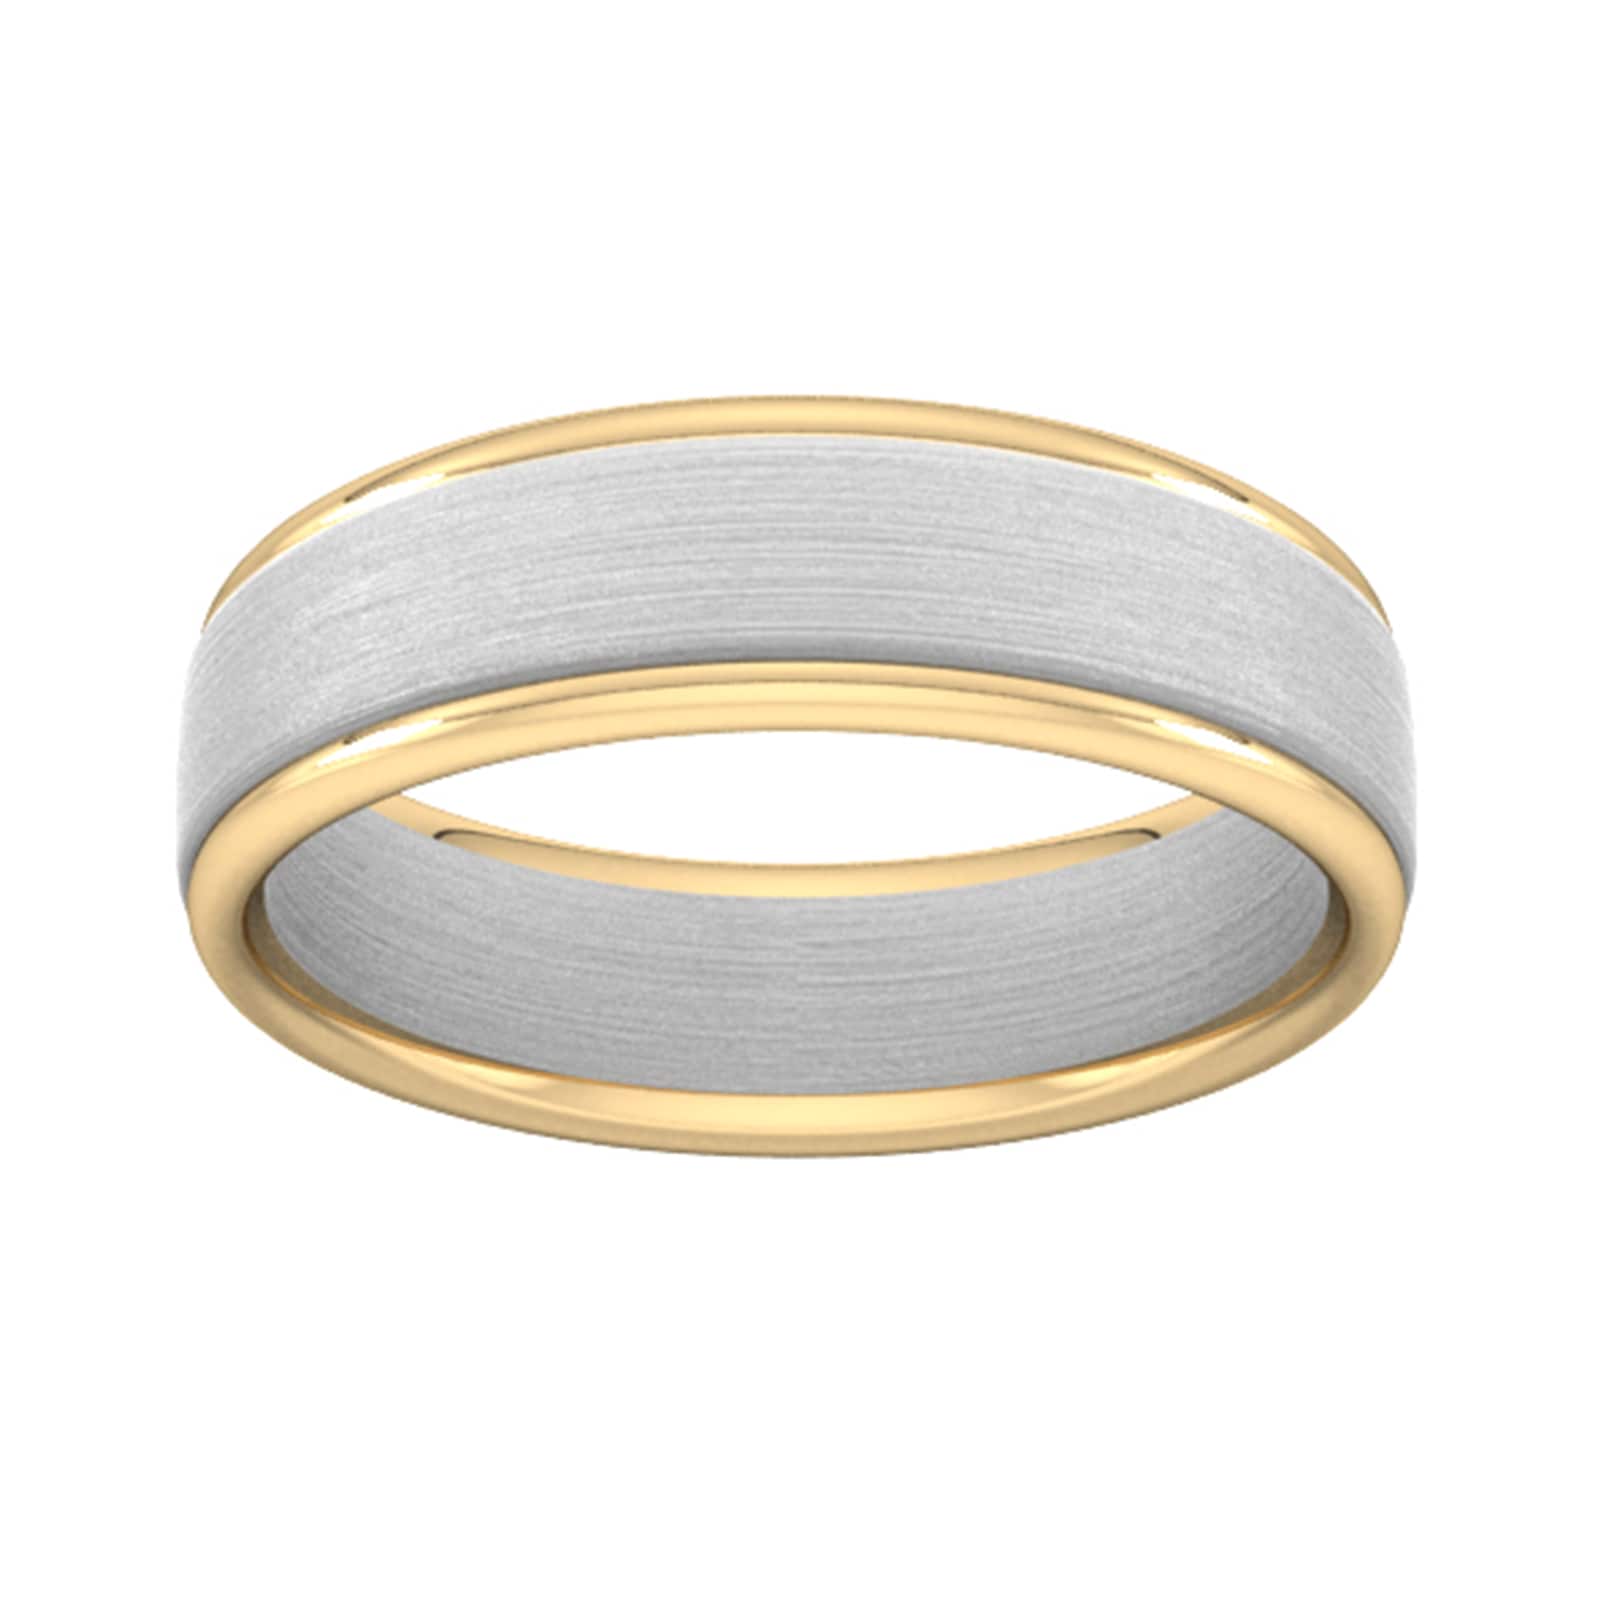 6mm Wedding Ring In 9 Carat White & Yellow Gold - Ring Size V